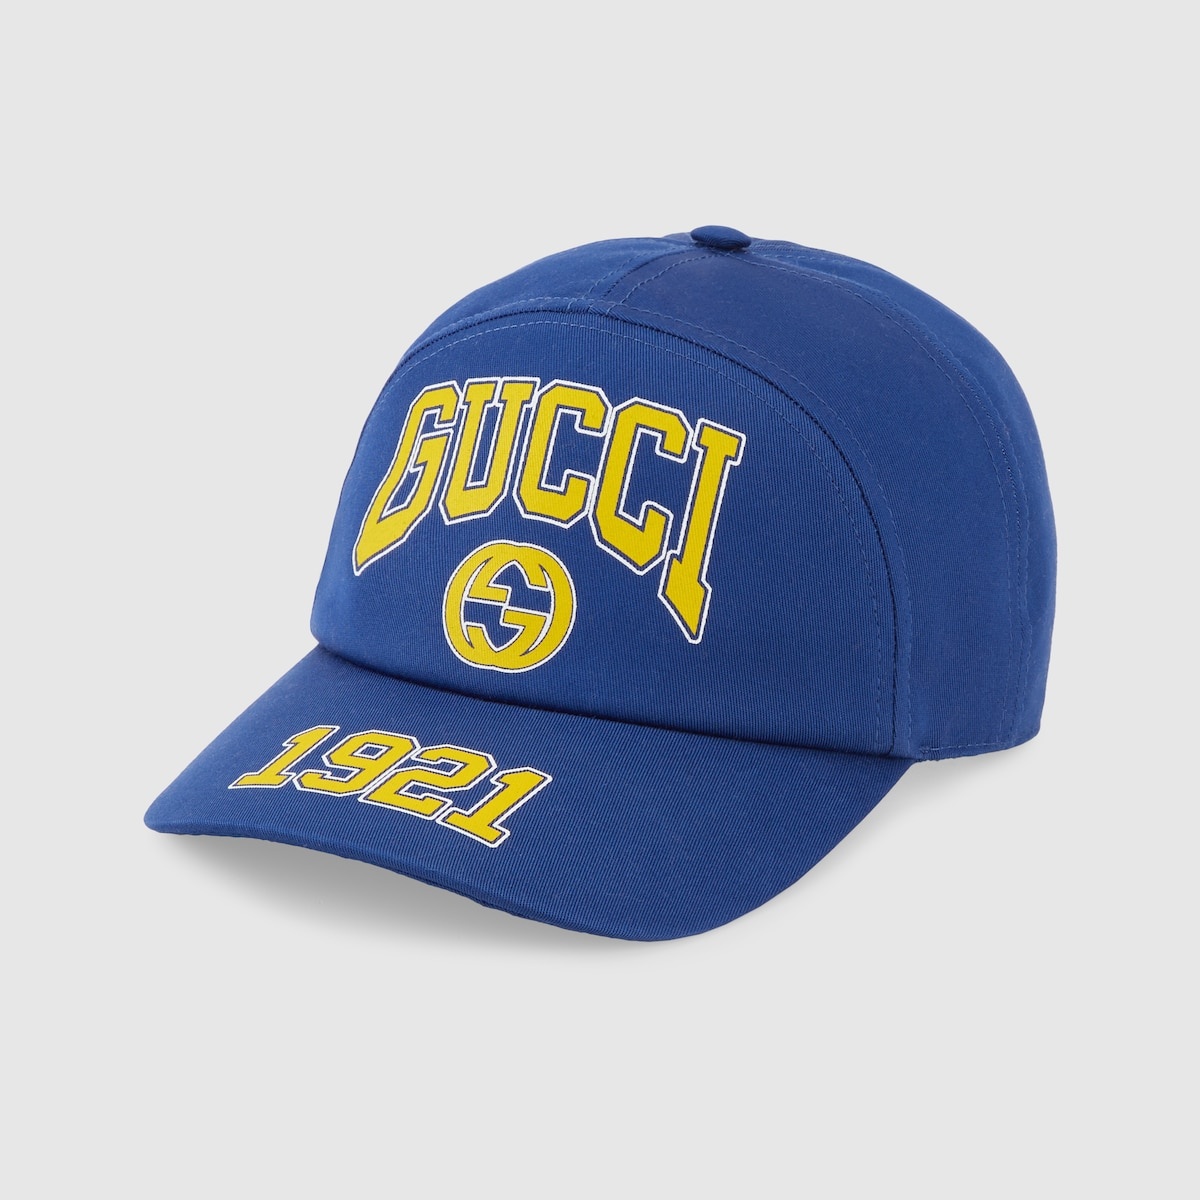 Gucci print cotton baseball hat - 1